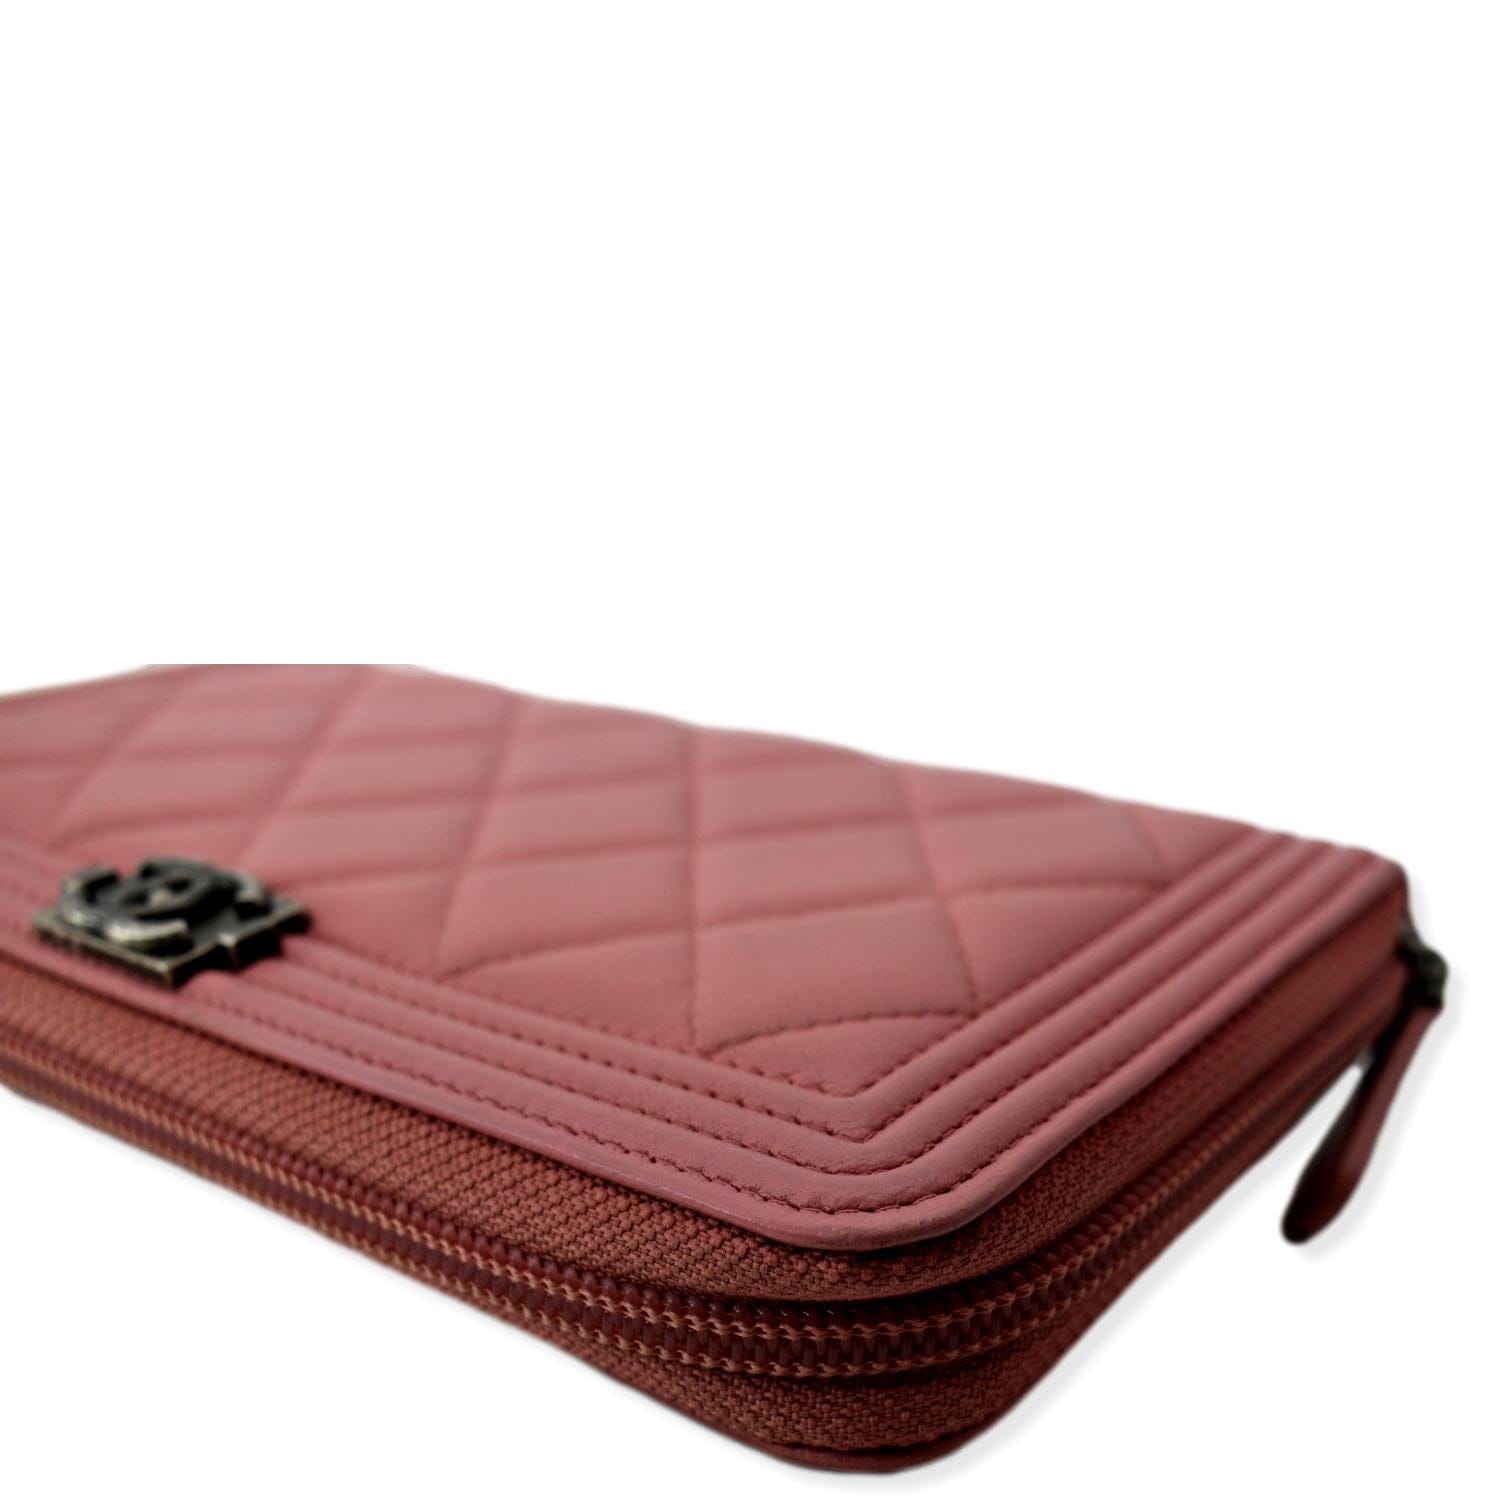 CHANEL Zip Around Lambskin Leather Large Organizer Wallet Pink-US